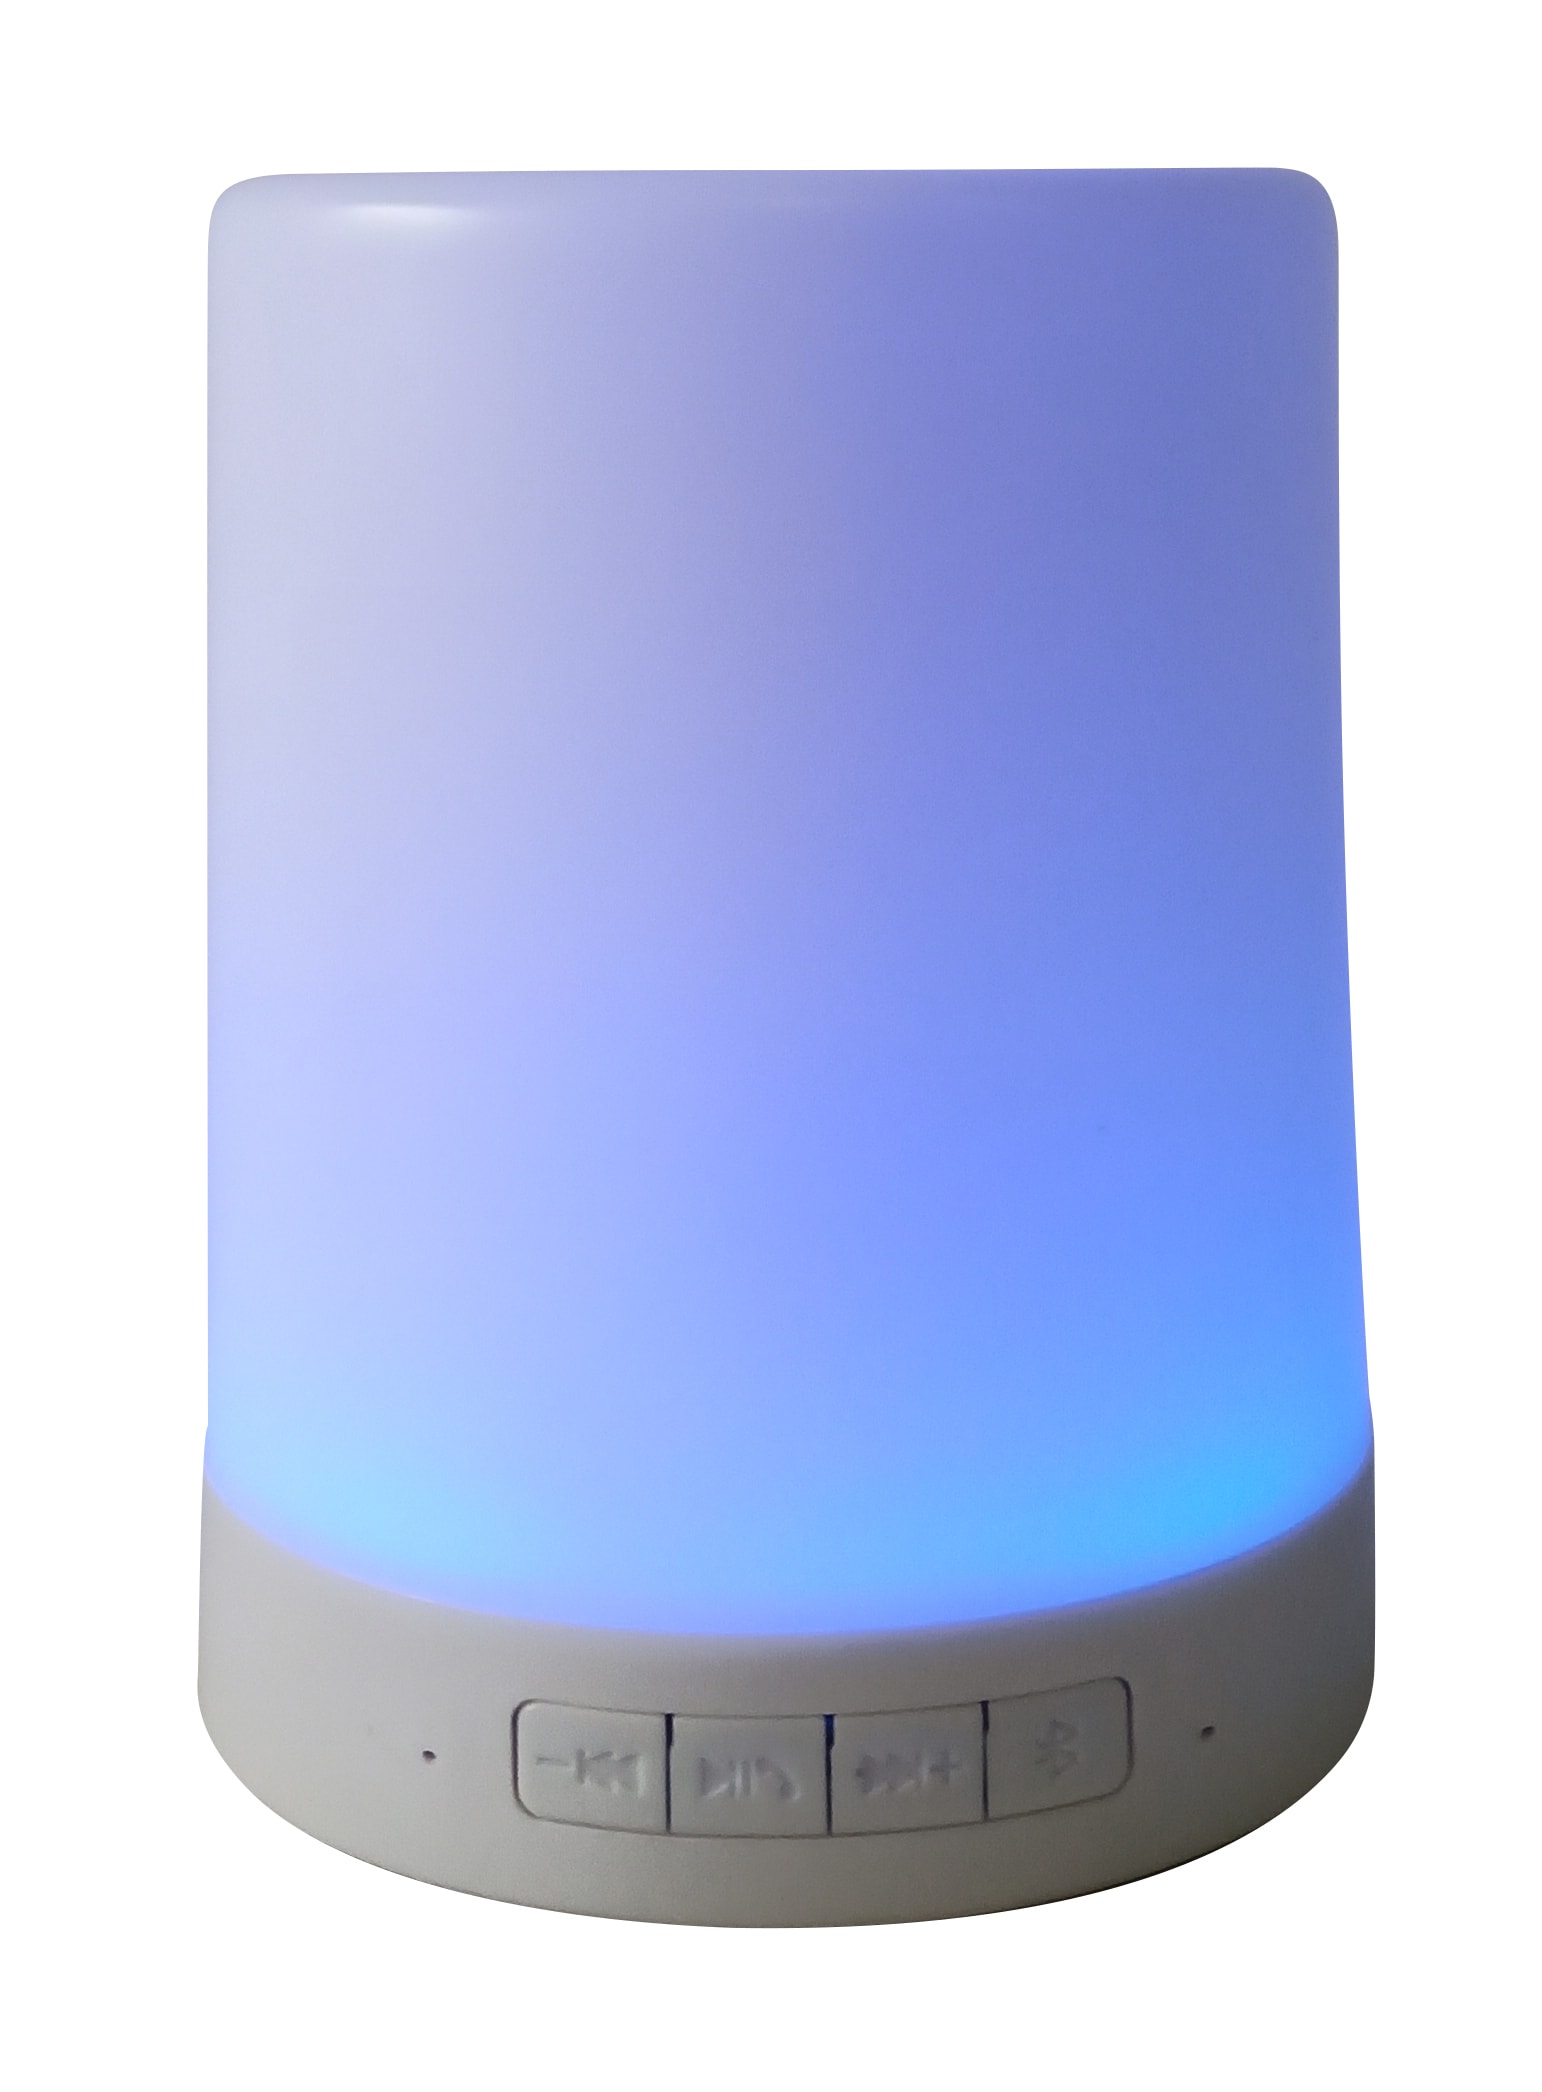 Light Speaker with Bluetooth & nice design